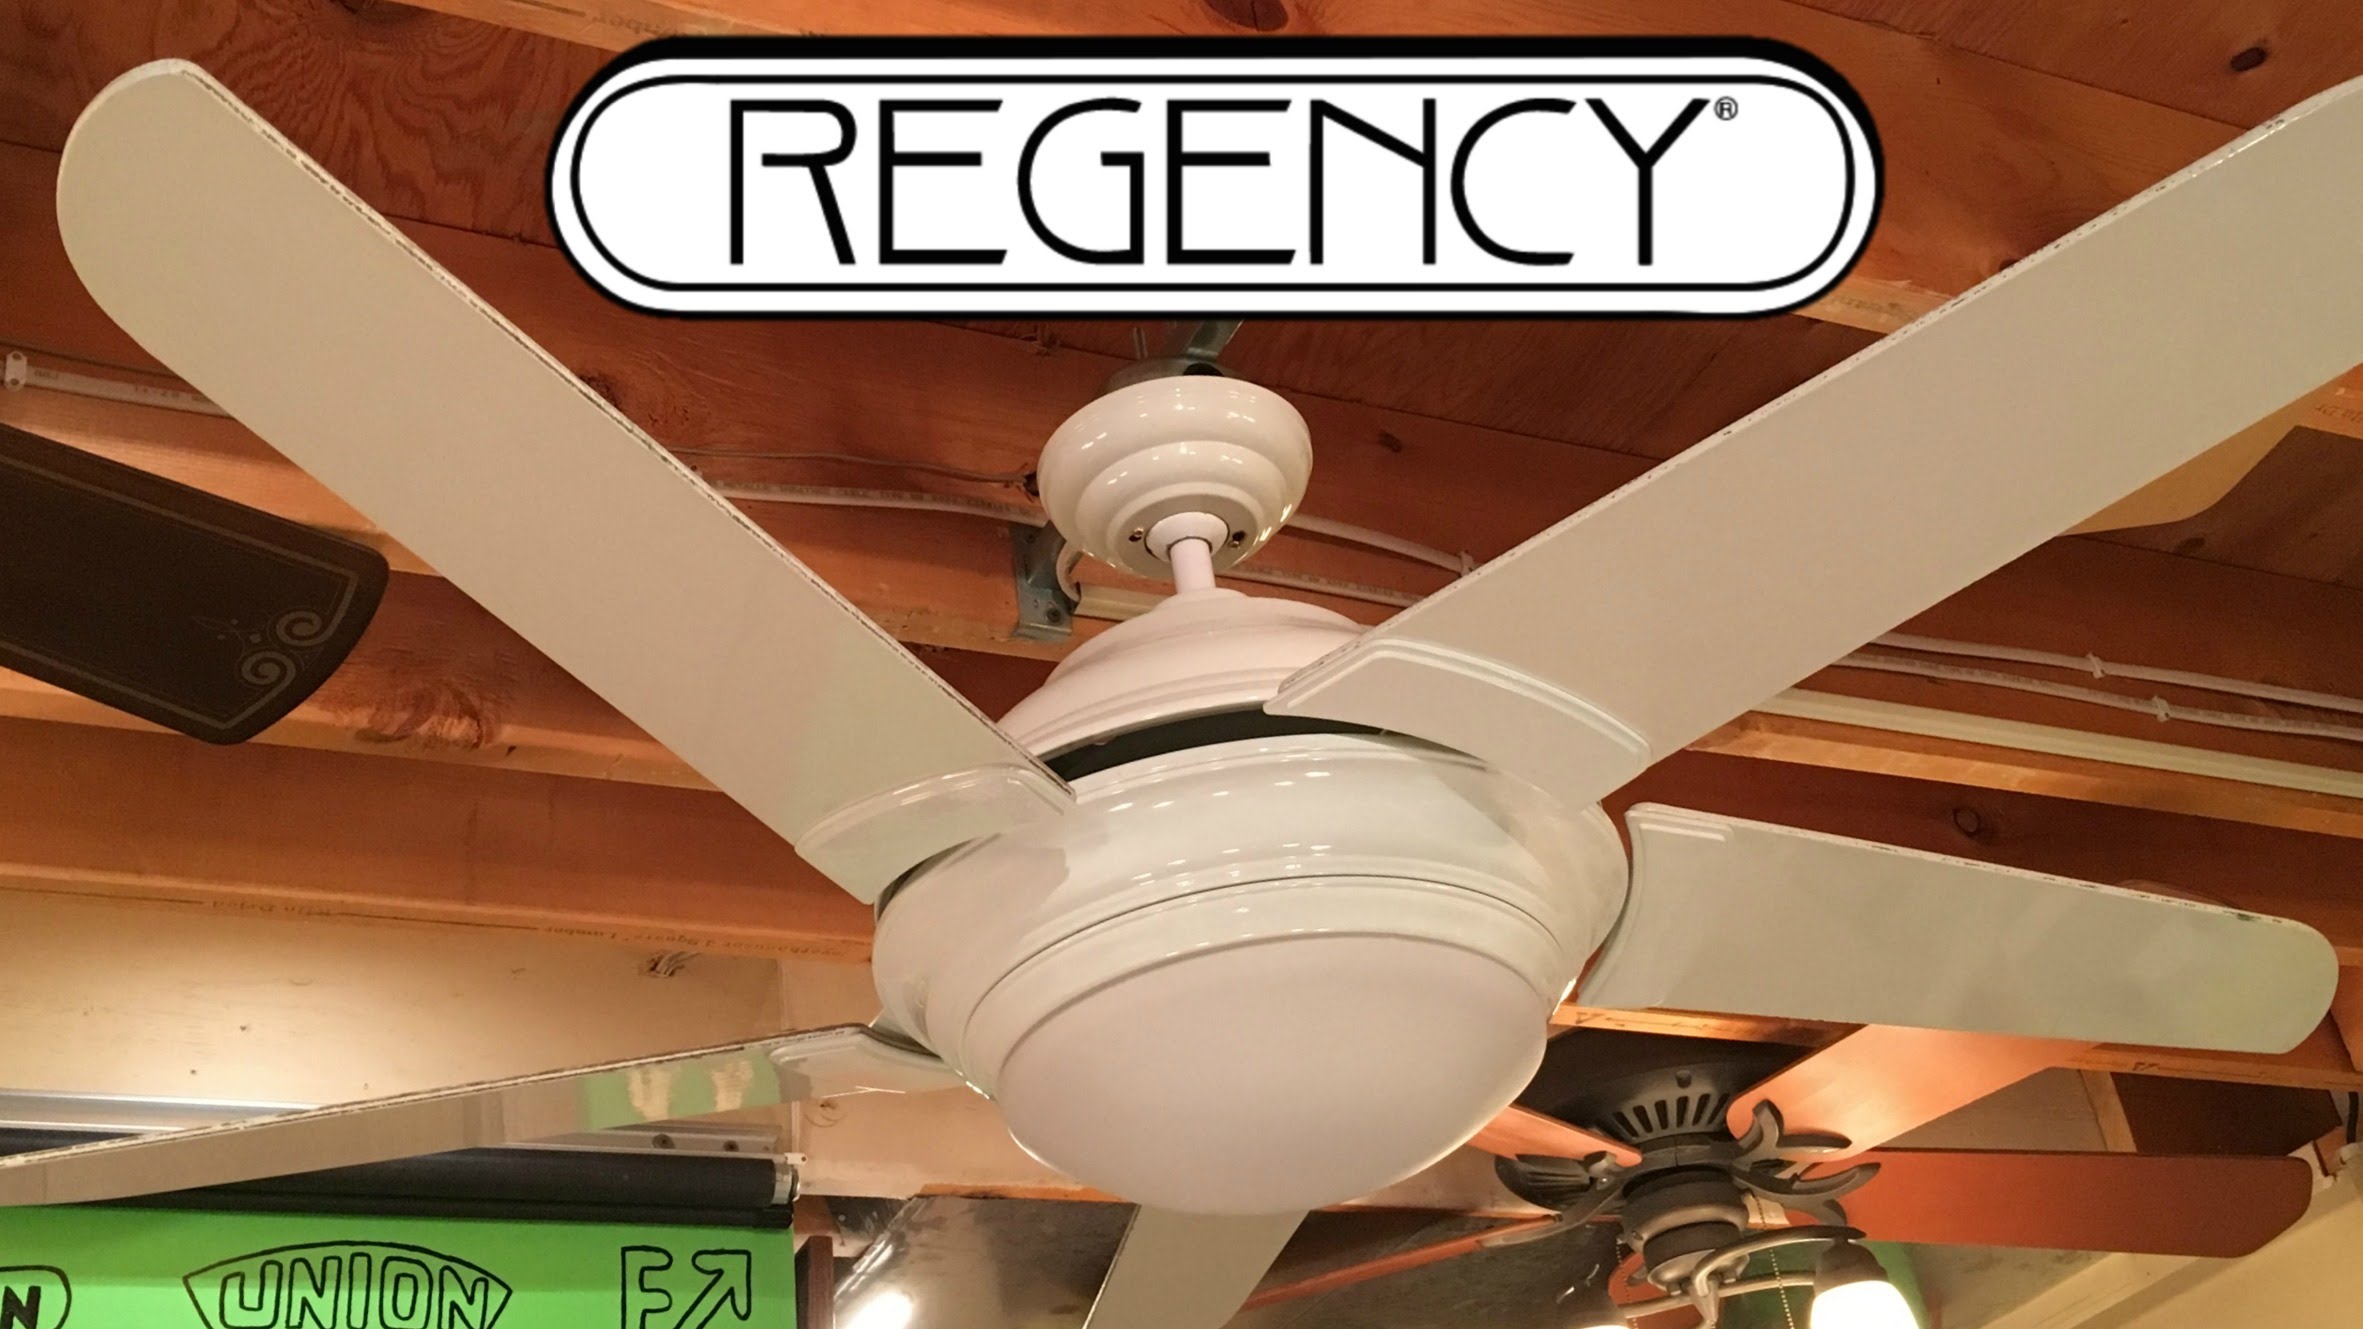 Astonishing regency solano ceiling fan pics residential lighting of and for trend